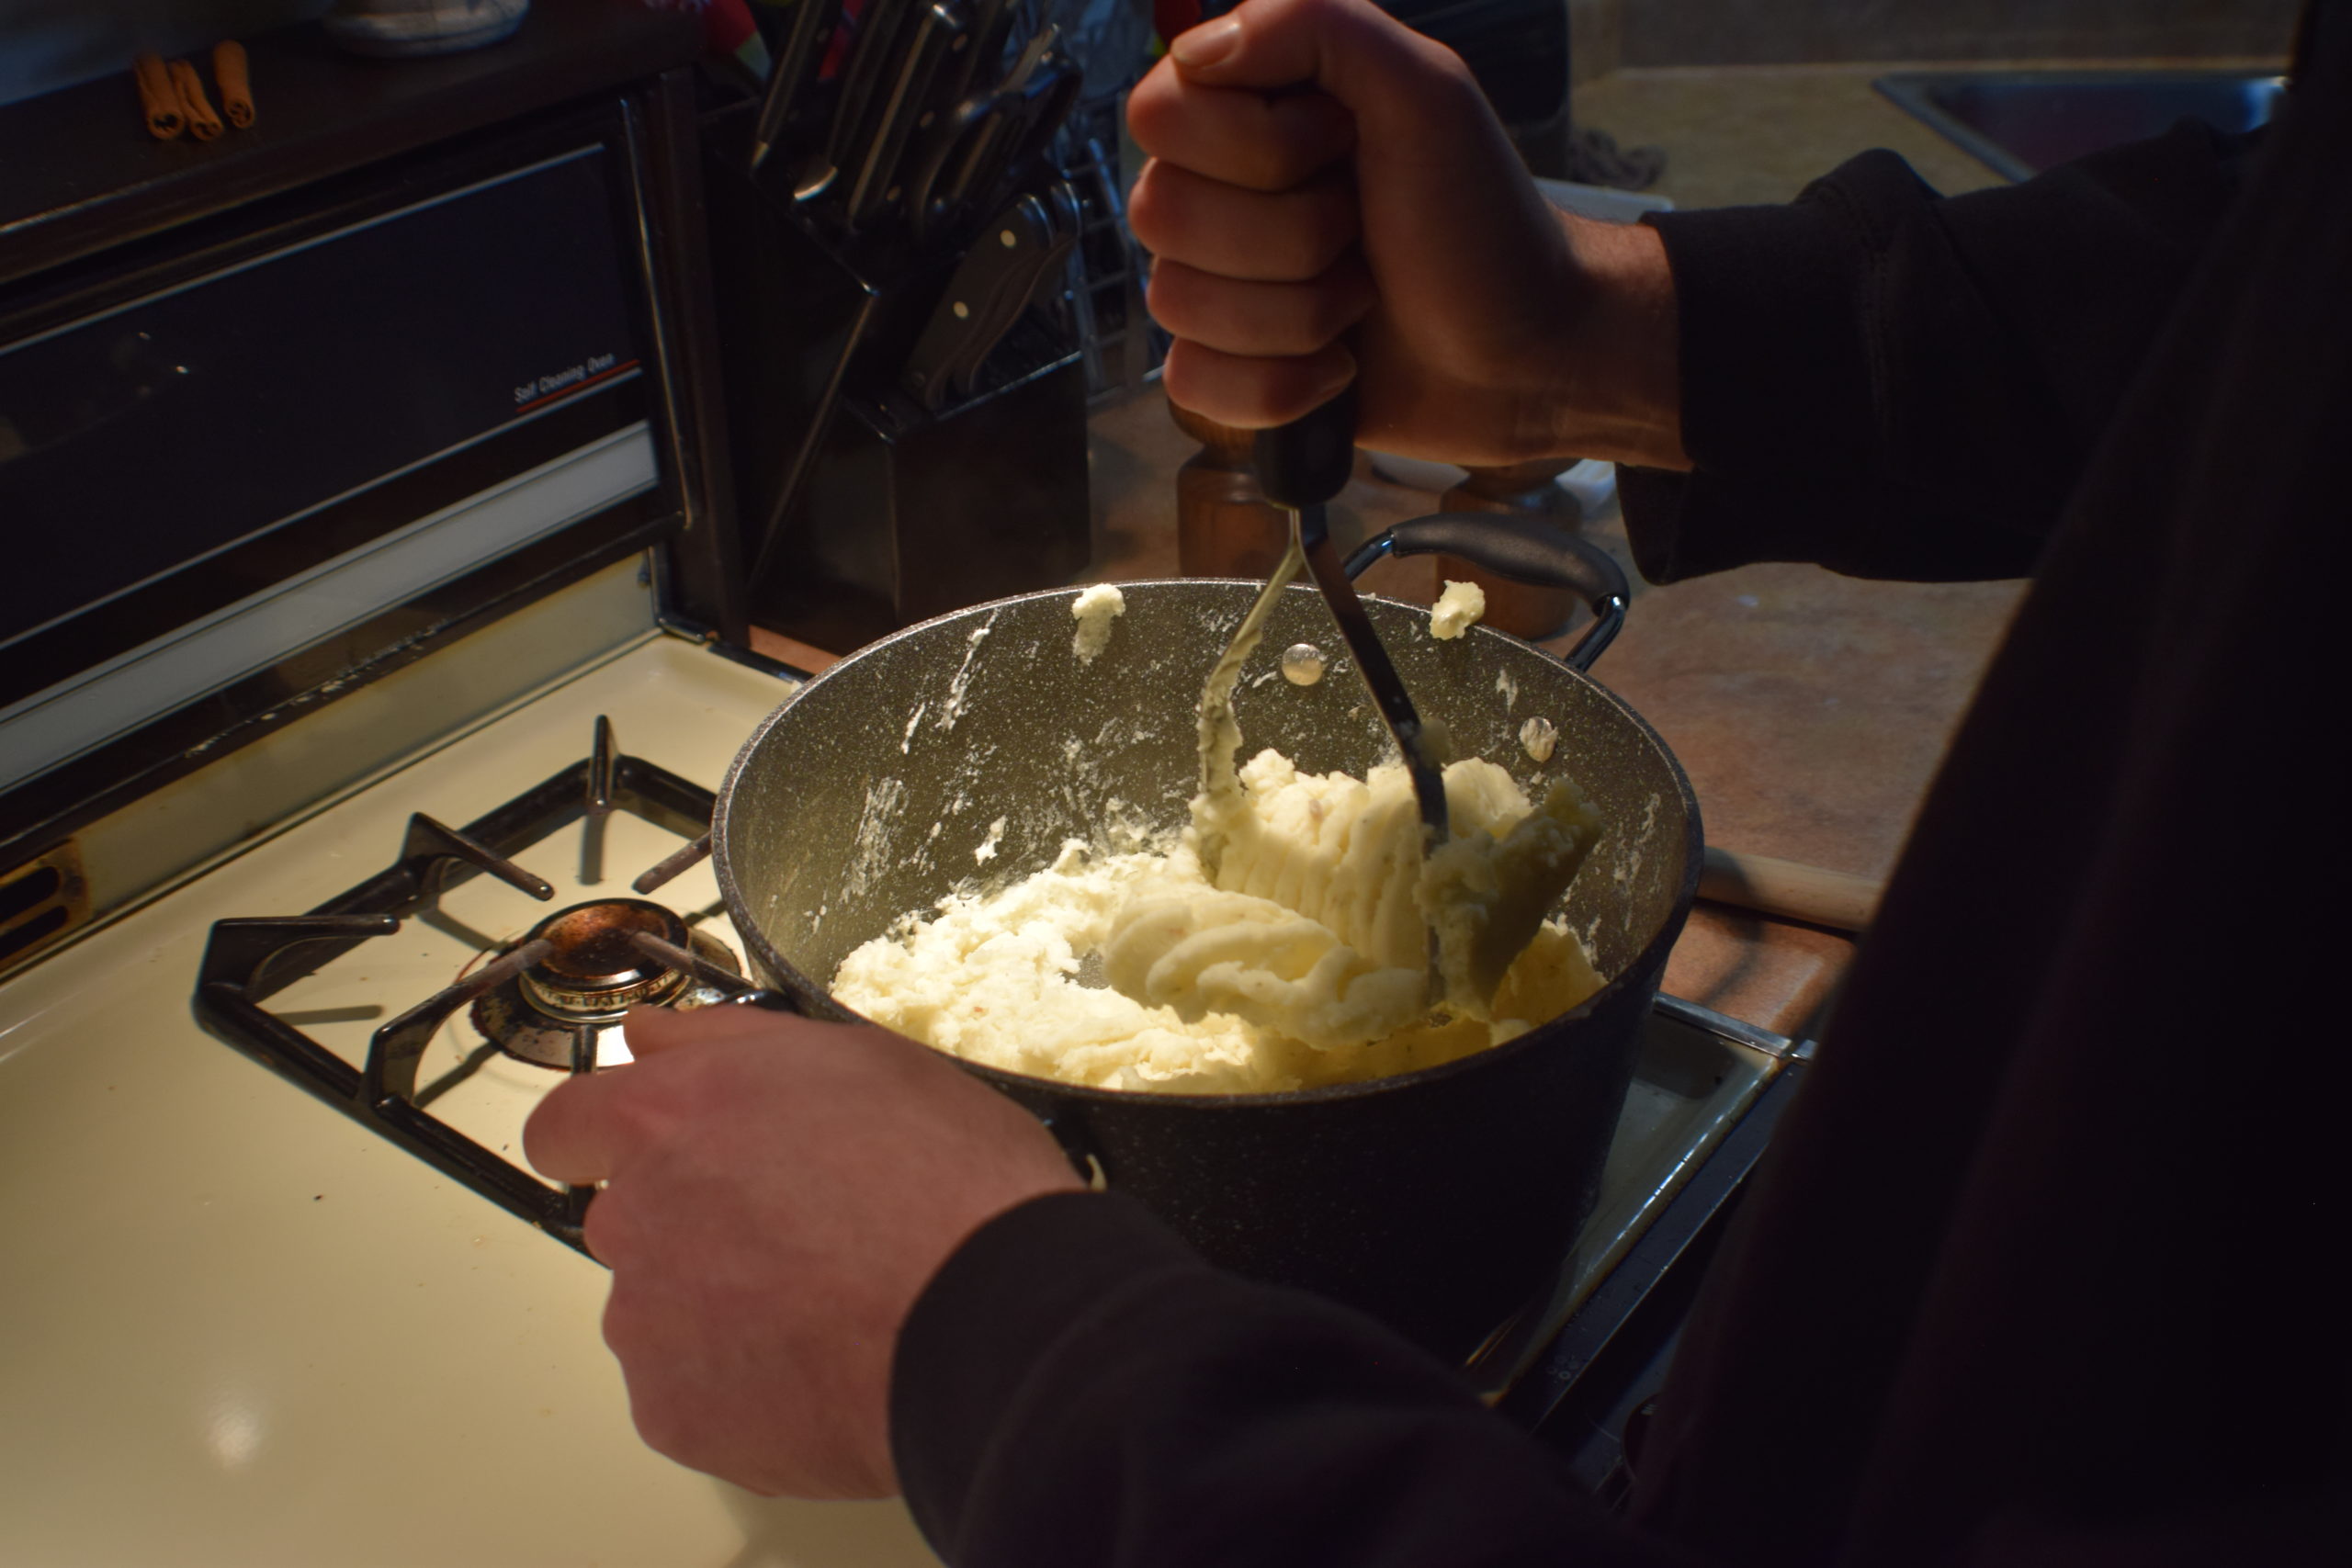 Man in sweater mashing potatoes with a potato masher